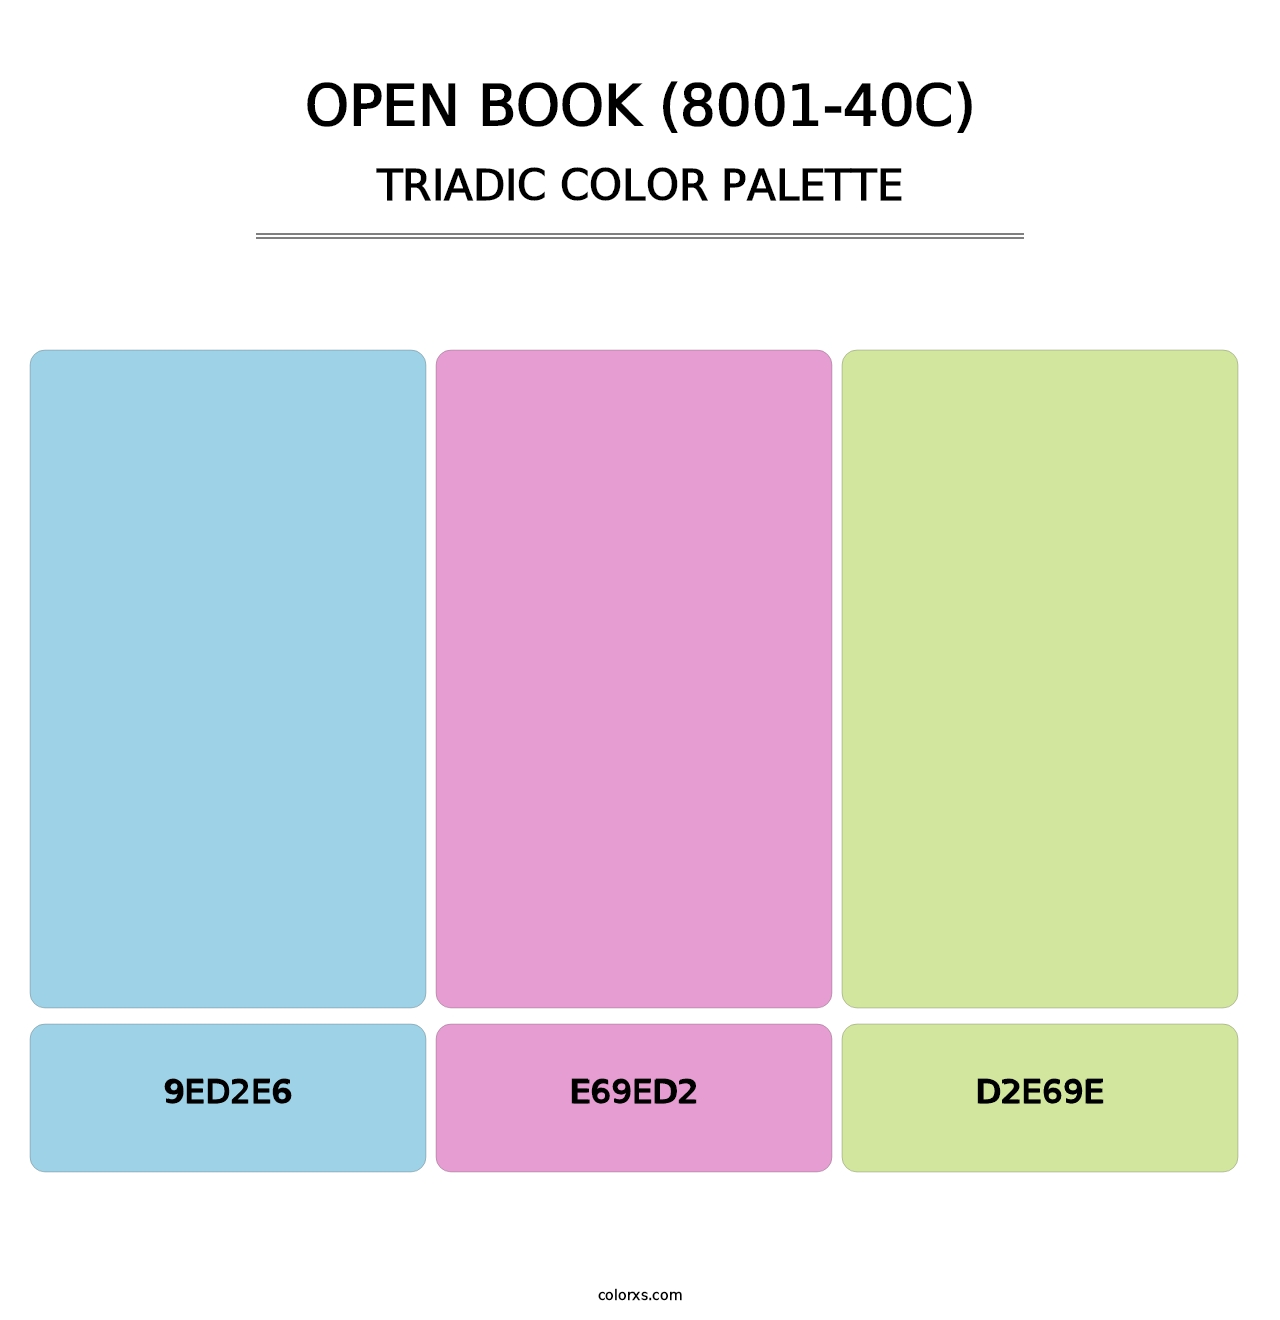 Open Book (8001-40C) - Triadic Color Palette